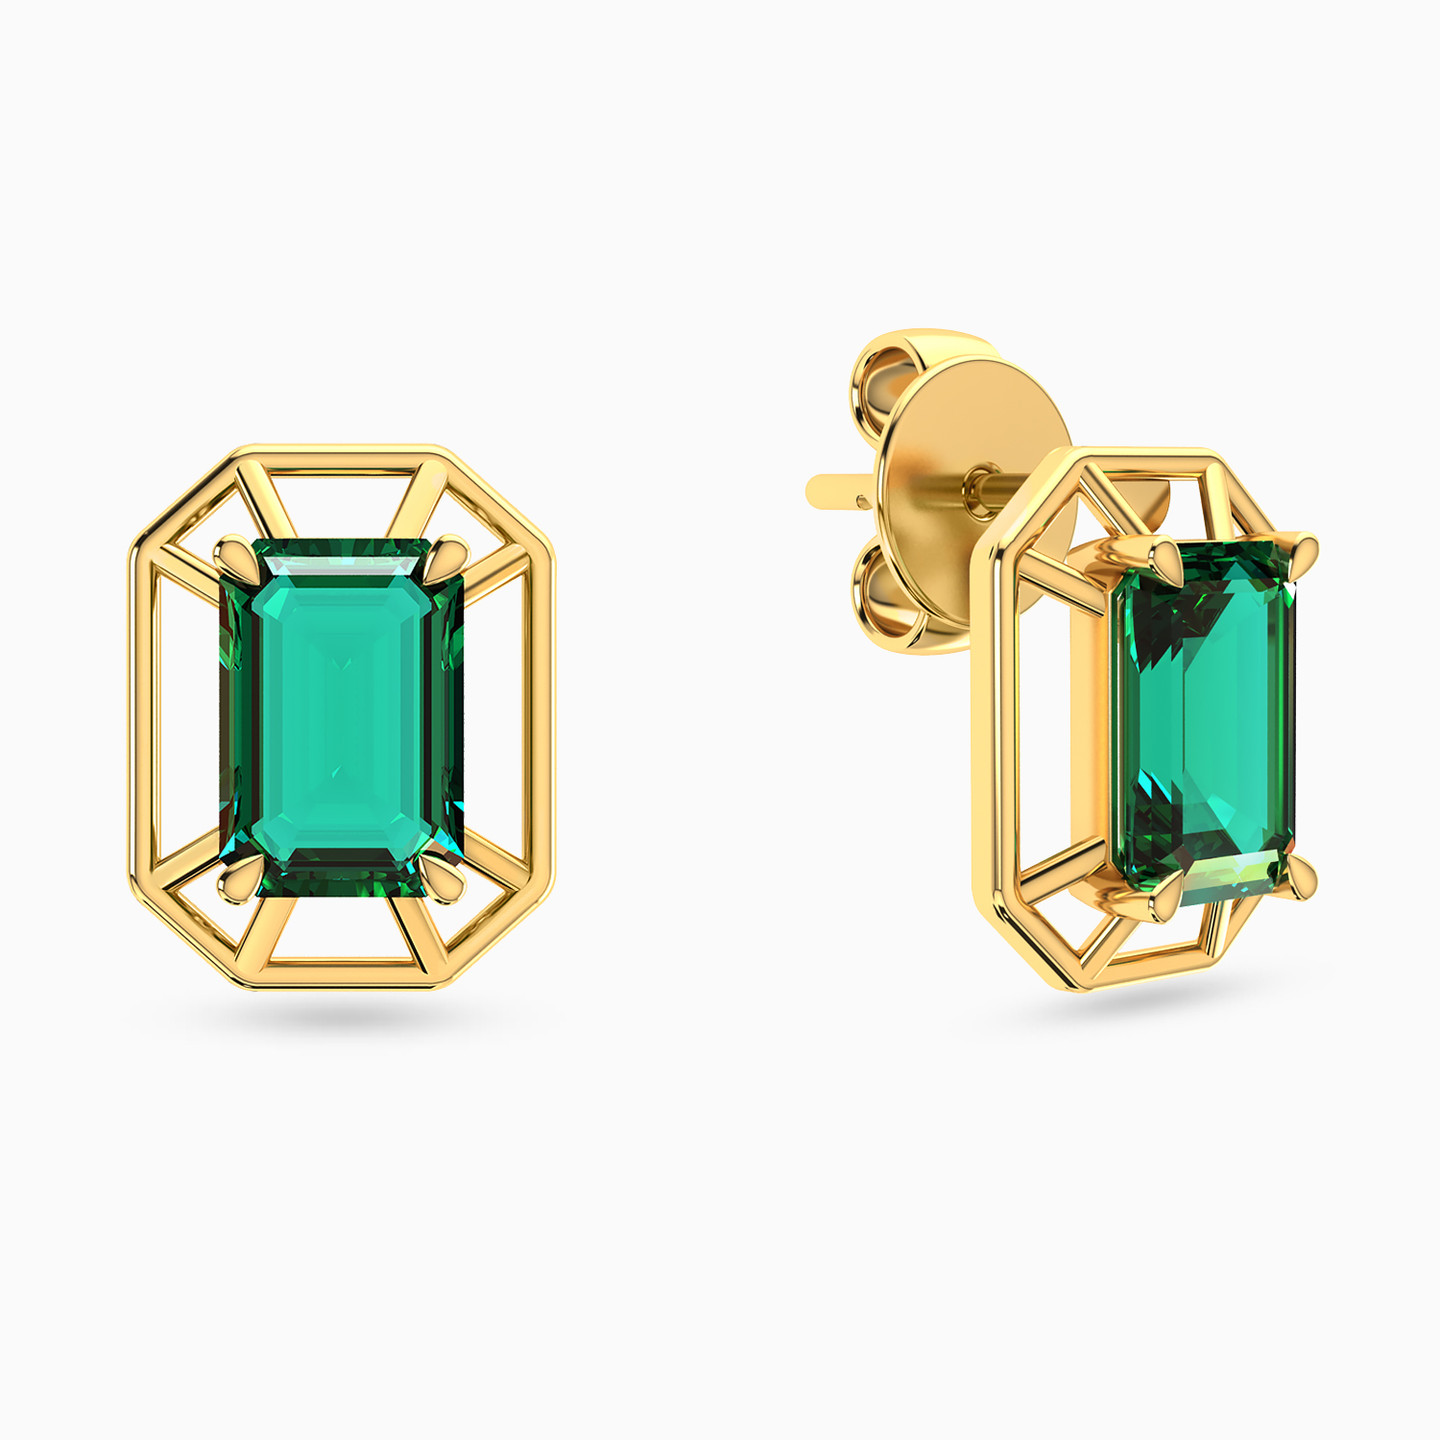 14K Gold Colored Stones Stud Earrings - 2